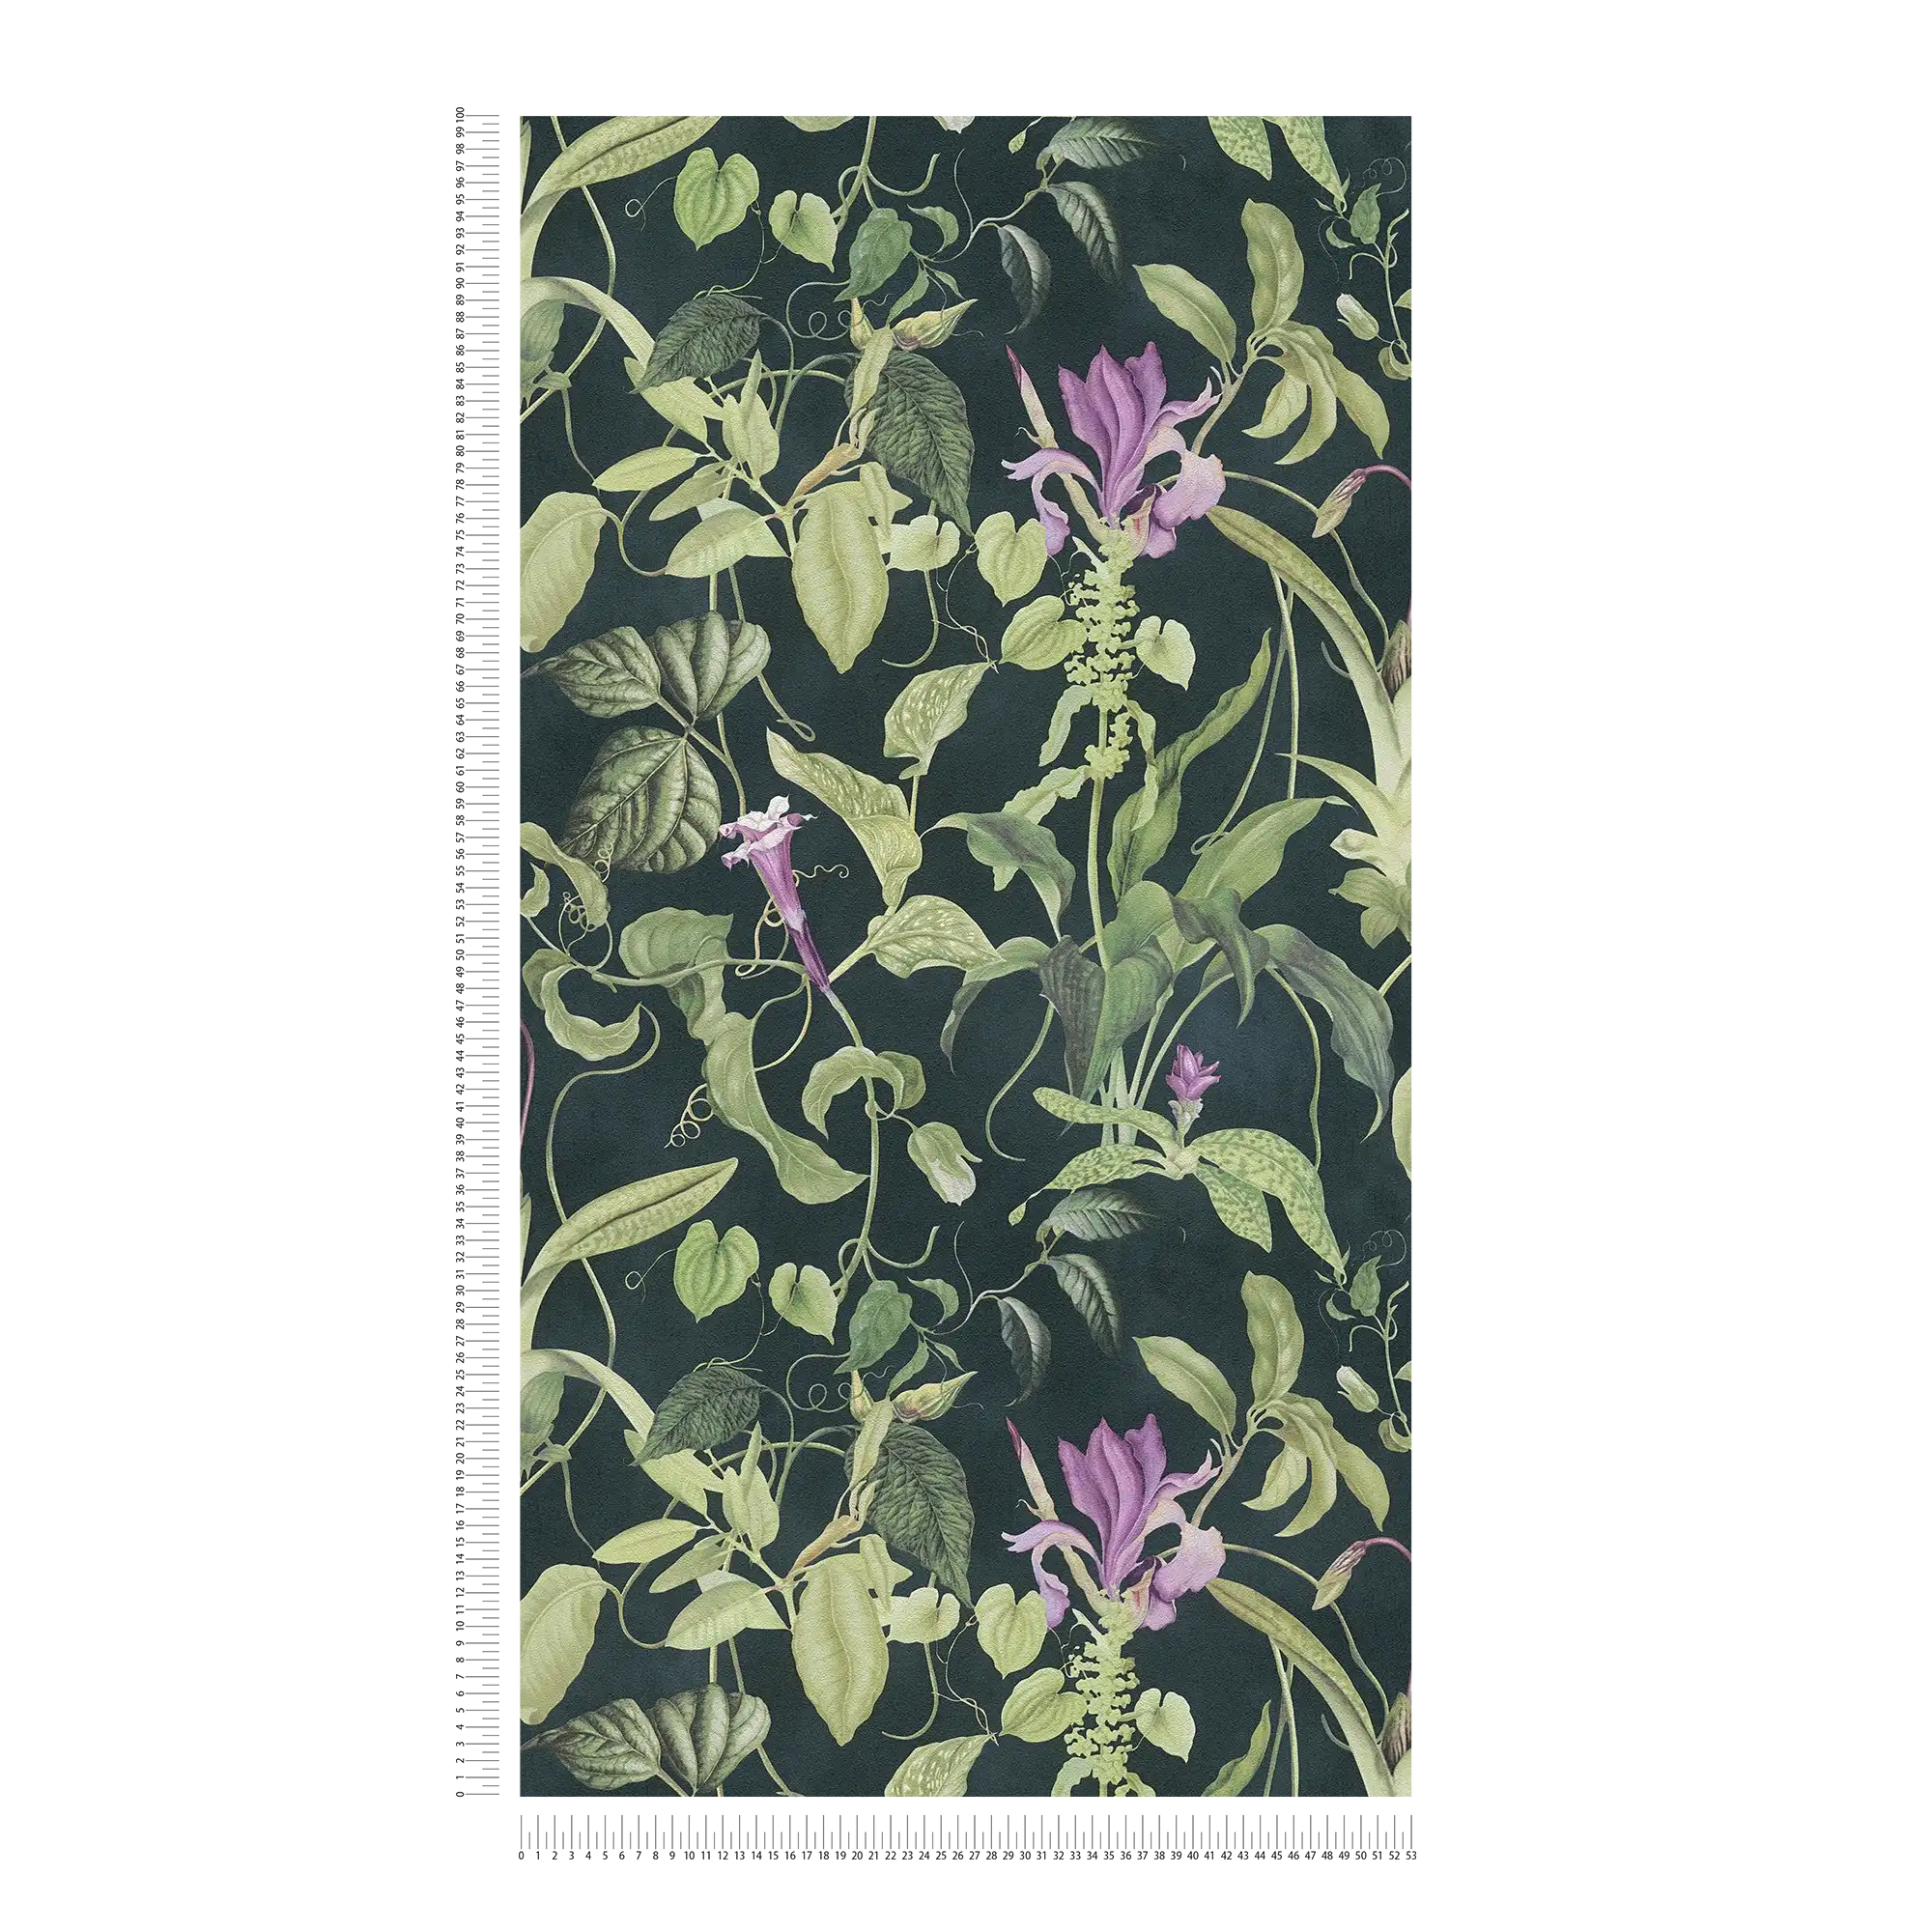             Carta da parati floreale tropicale Design by MICHALSKY - Verde, nero
        